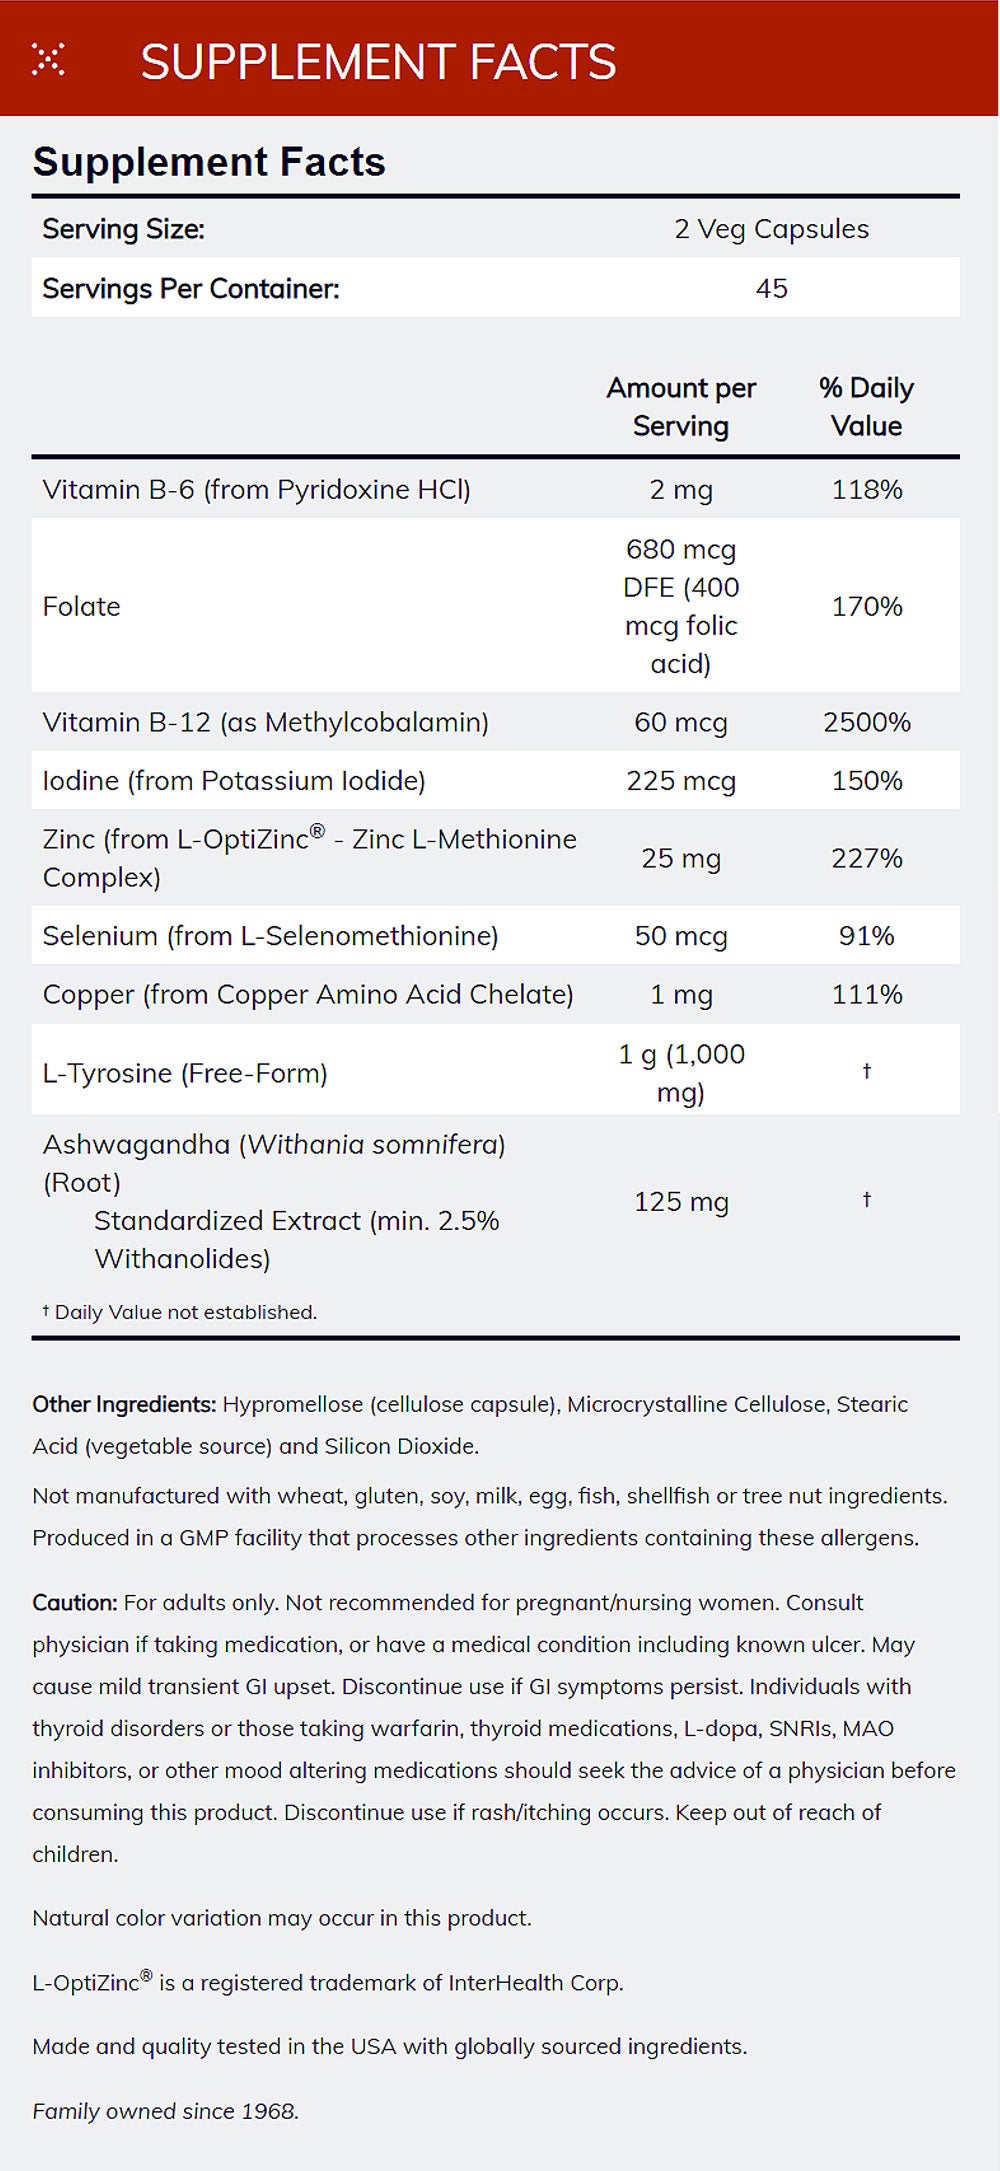 NOW Supplements, Thyroid Energy™, Iodine and Tyrosine plus Selenium, Zinc and Copper, 90 Veg Capsules - Bloom Concept